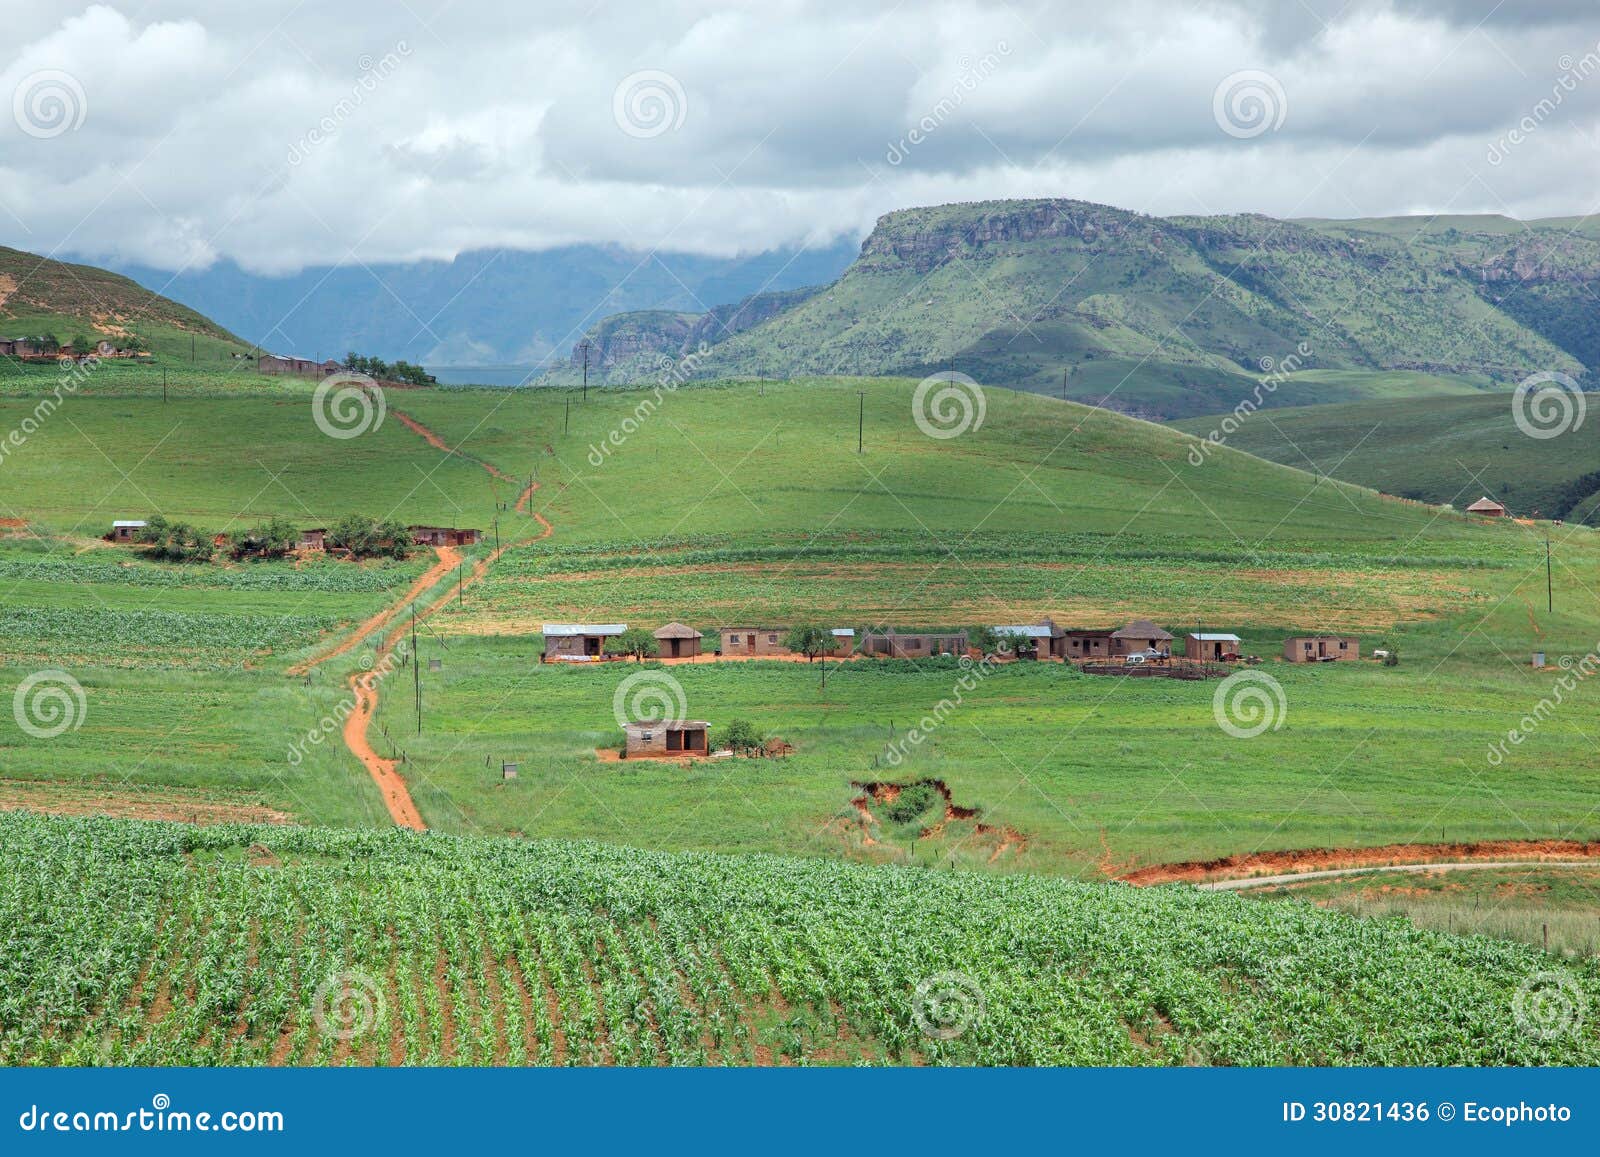 rural settlement